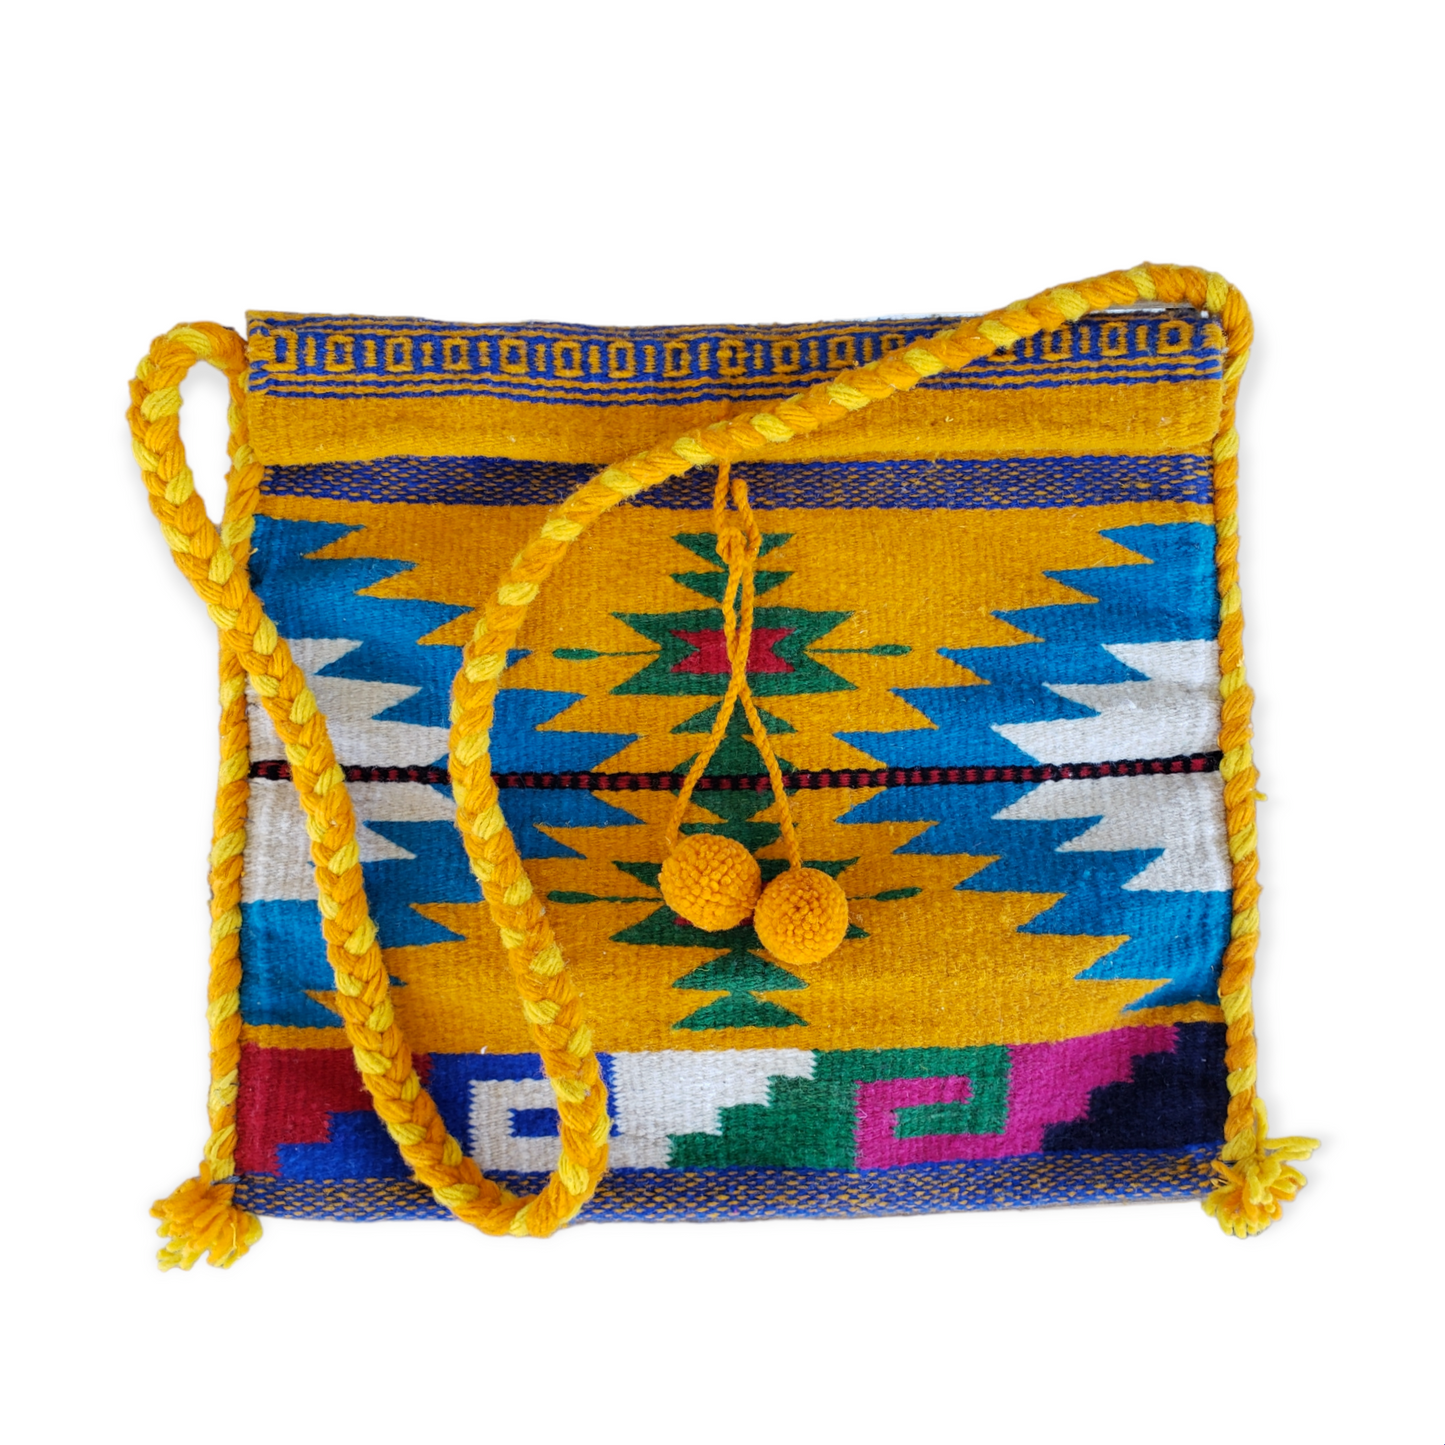 Yellow  Woven Bag from Oaxaca